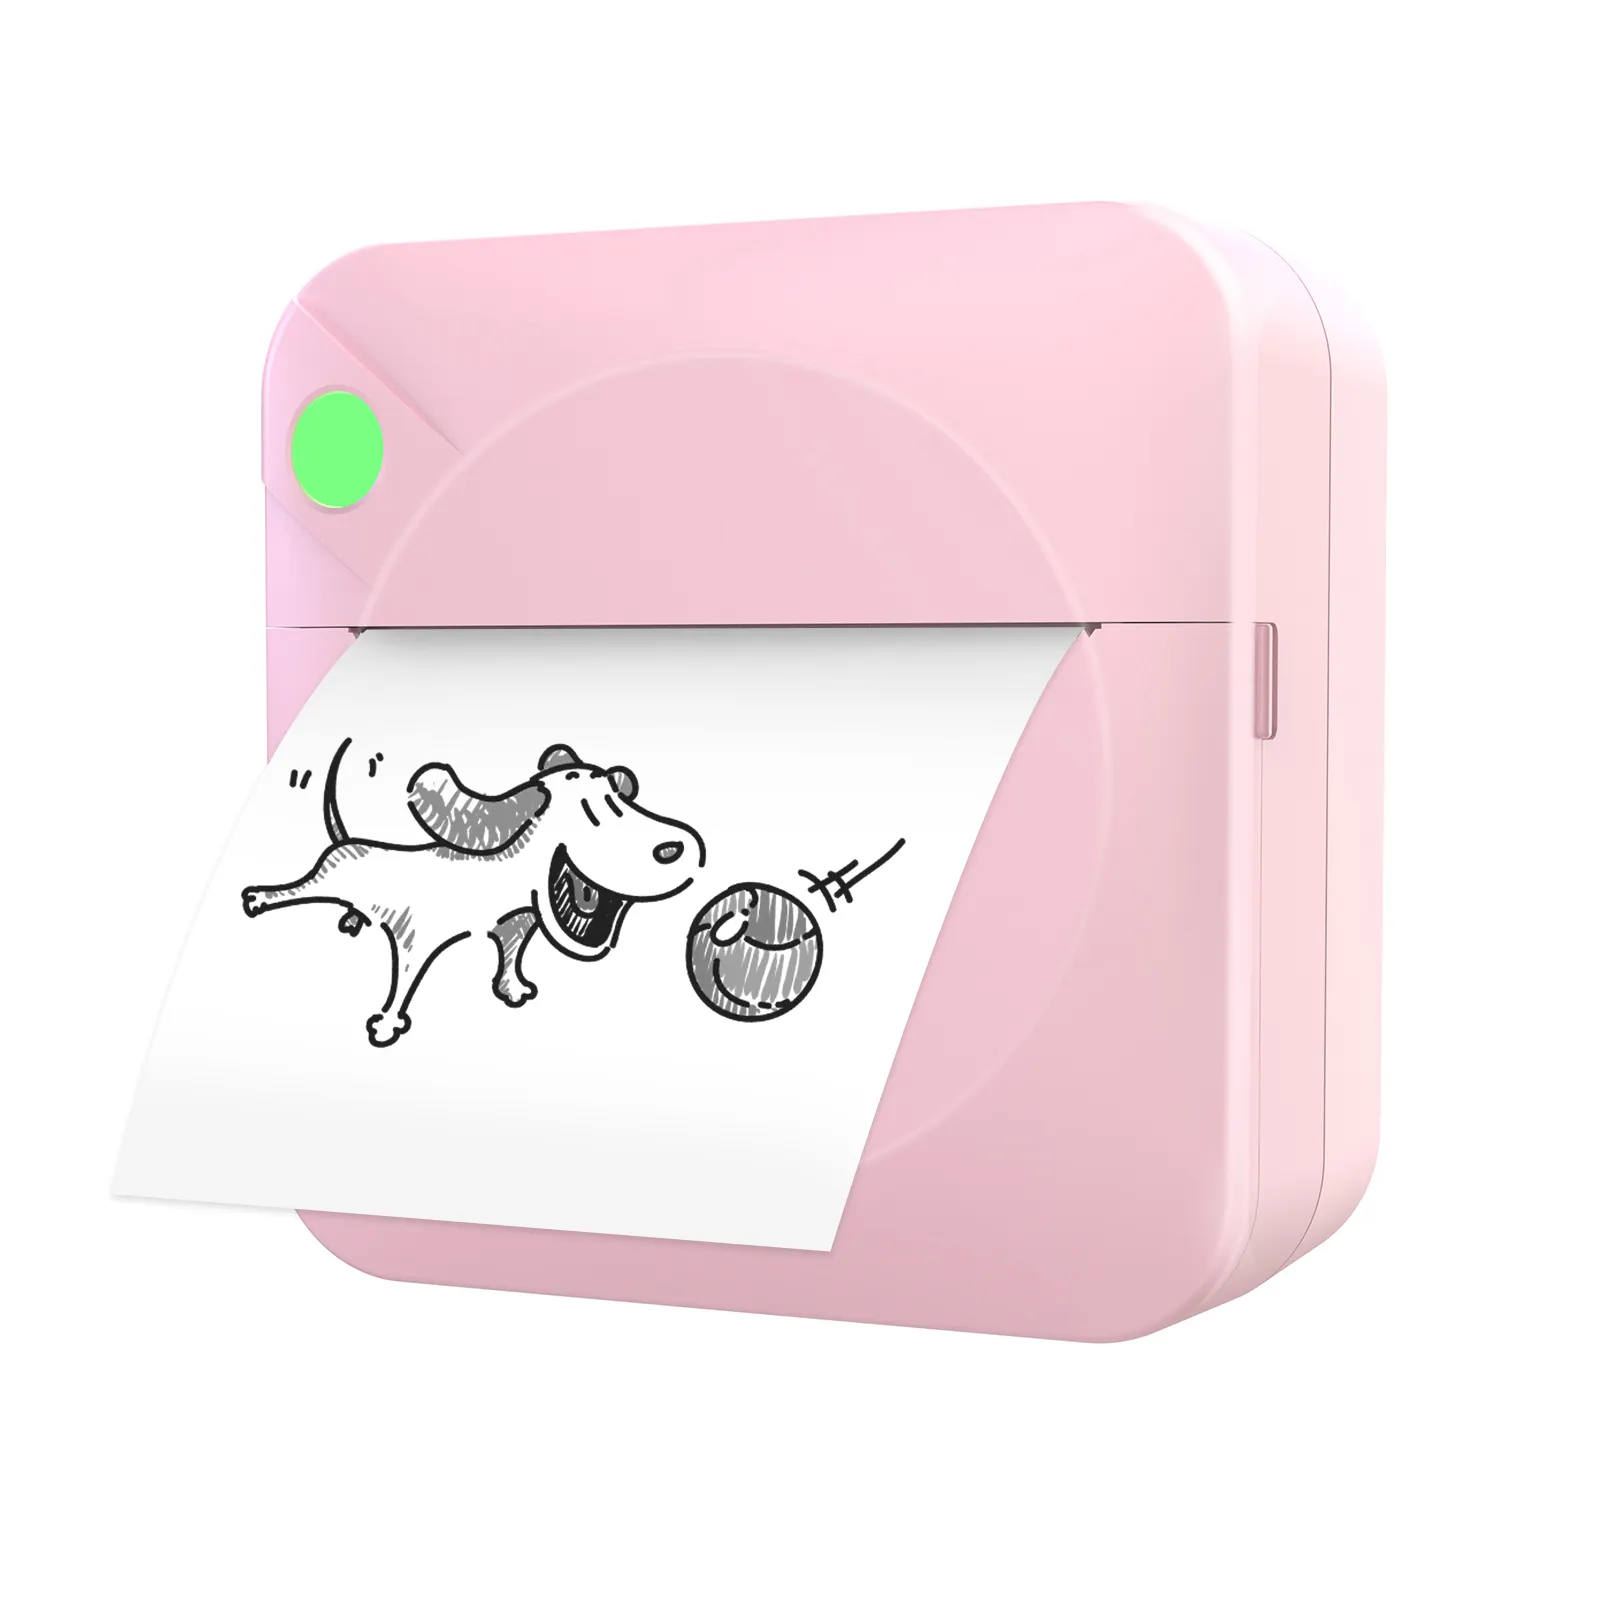 Color instant mini photo thermal printing copier machine both printers for iphone ribbon wifi camera photo printer color